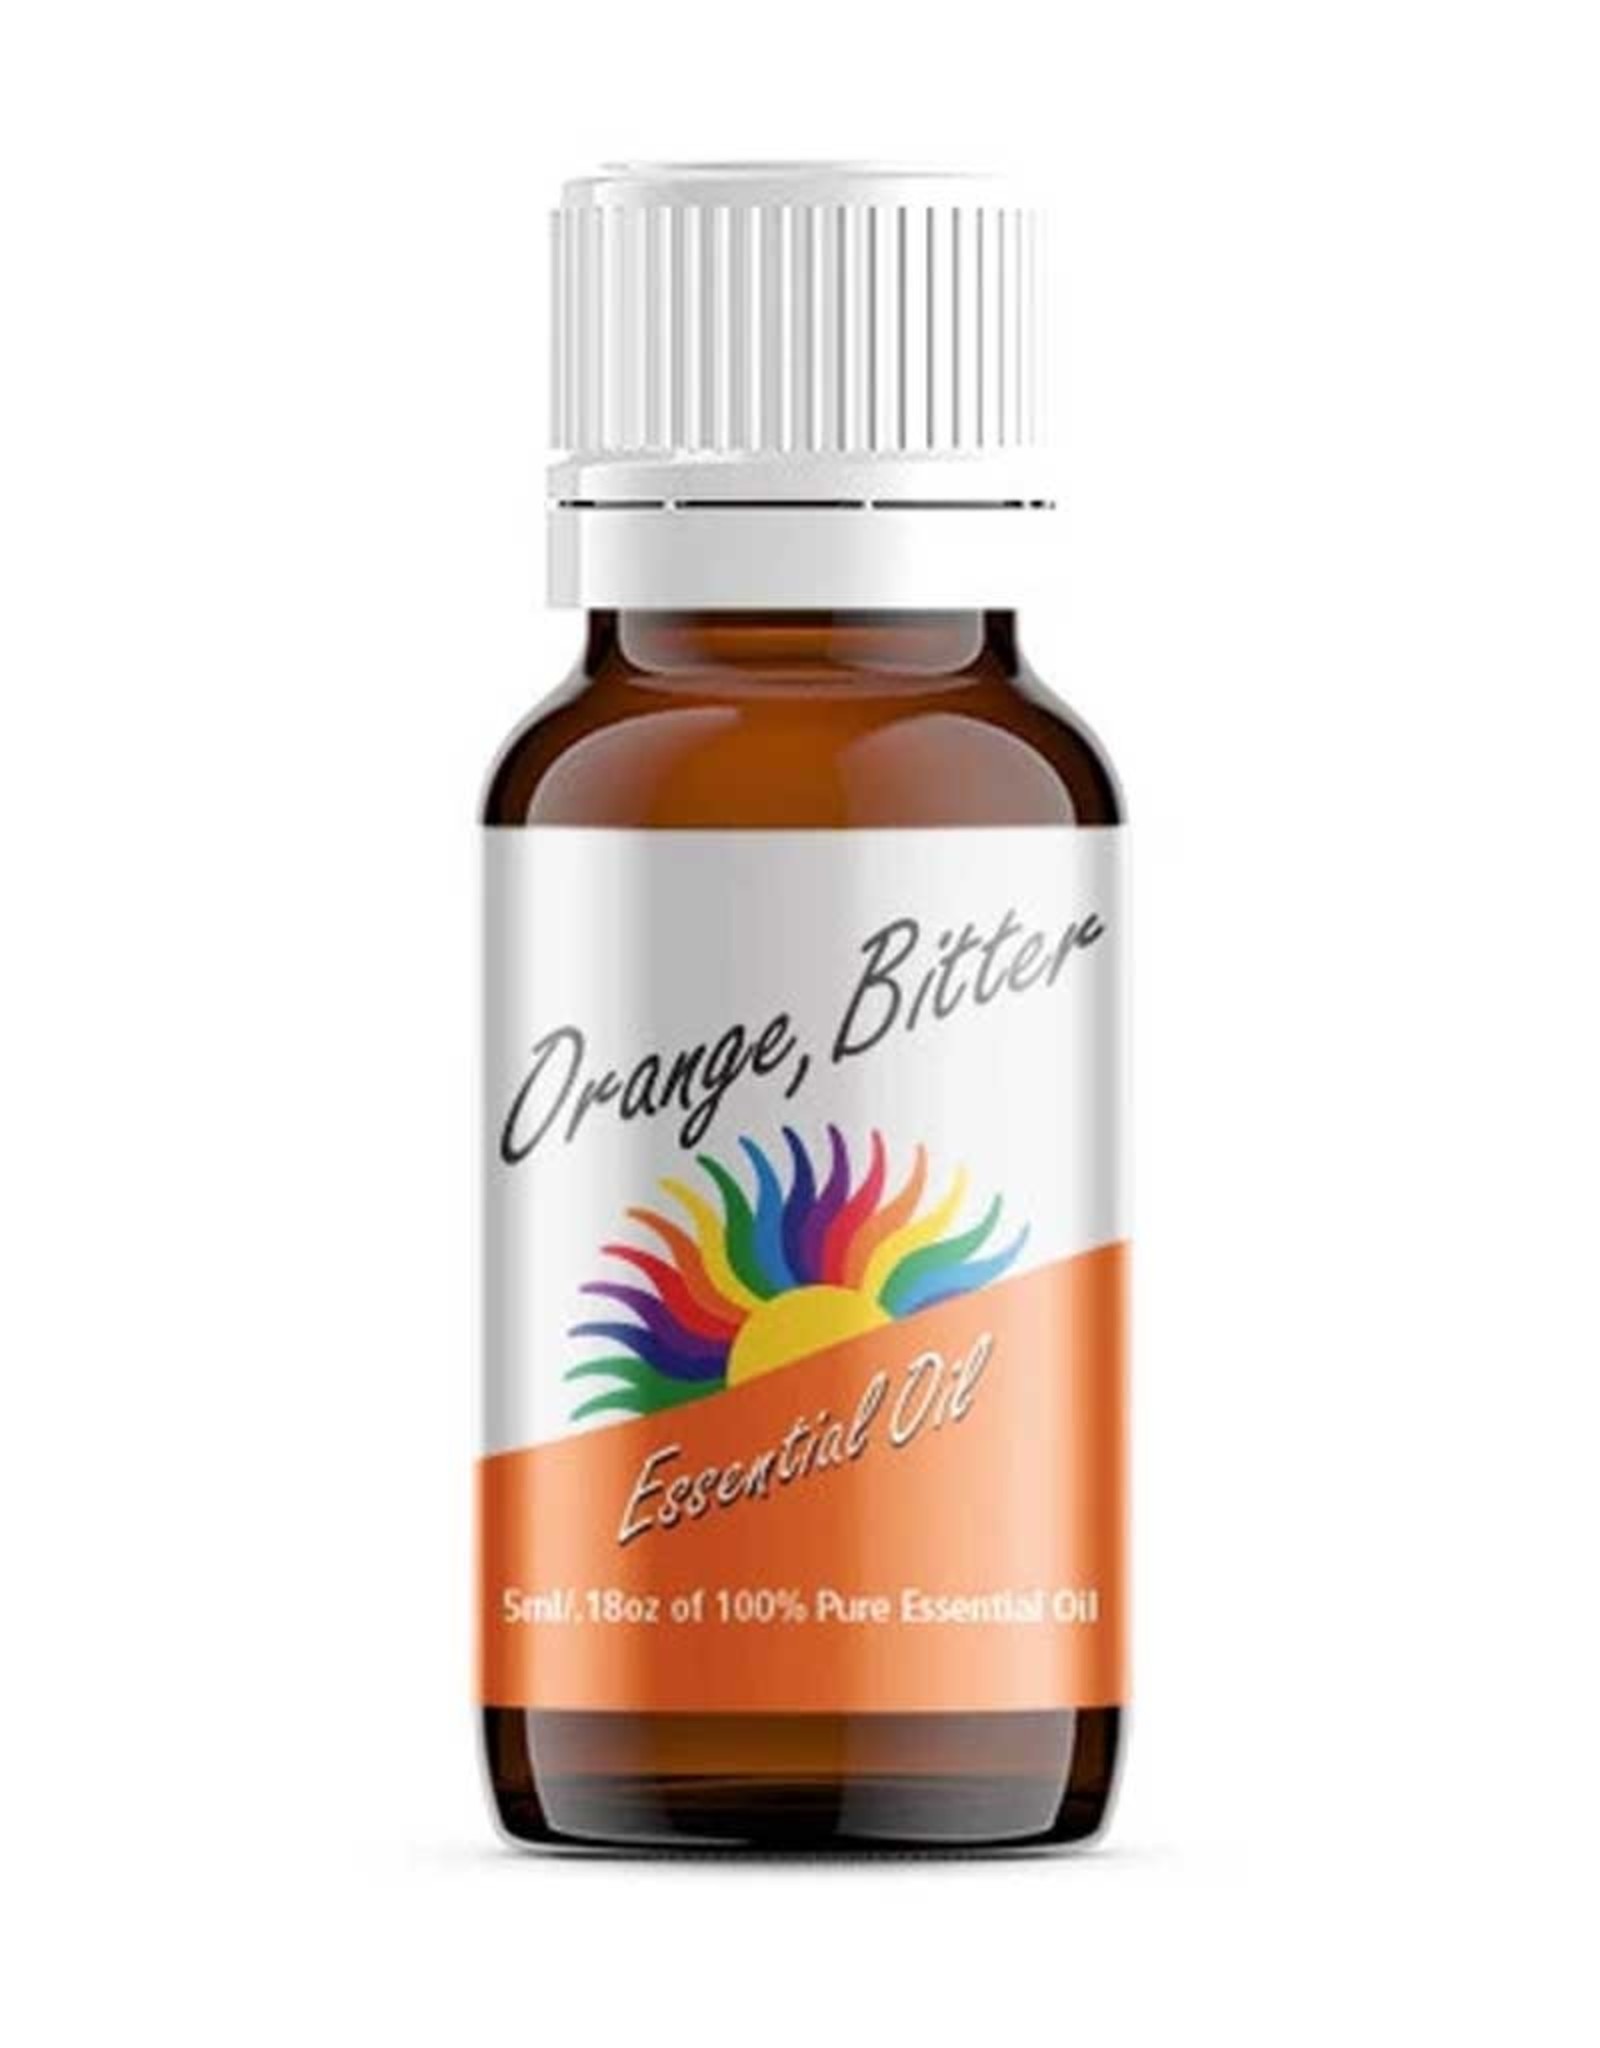 Colour Energy Orange Bitter Essential Oil 10ml